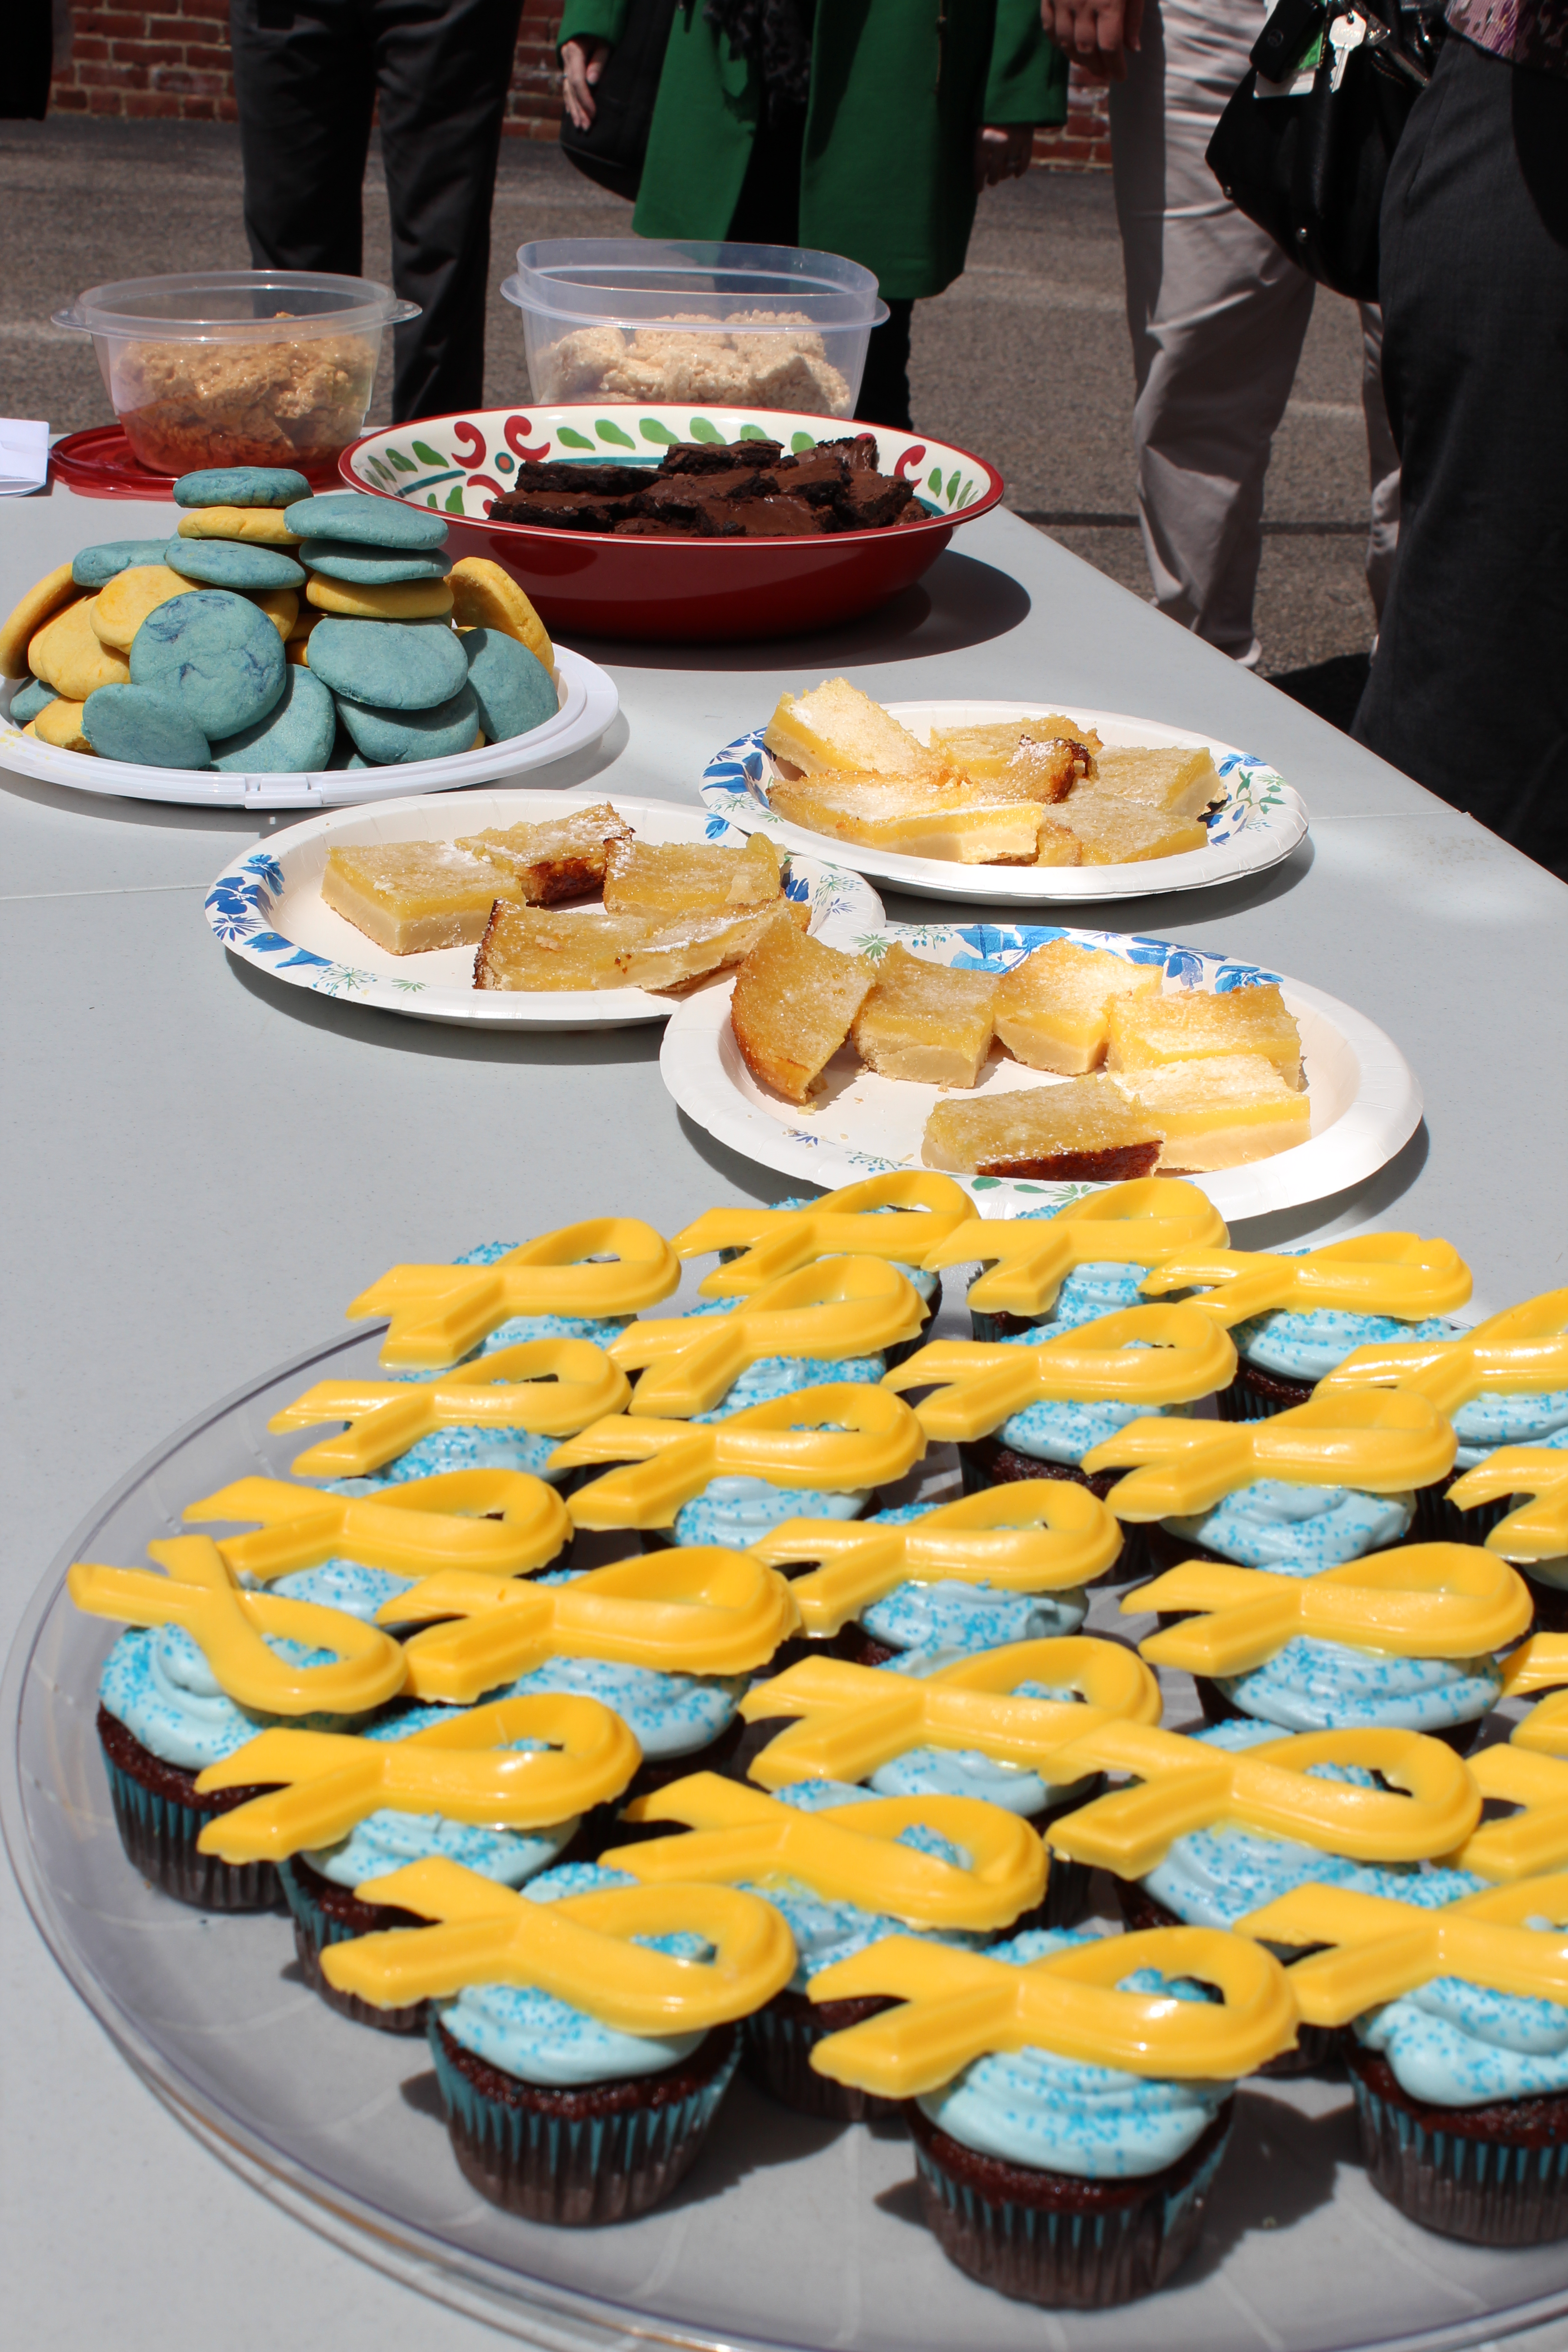 Desserts decorated in honor of the Boston Marathon's colors